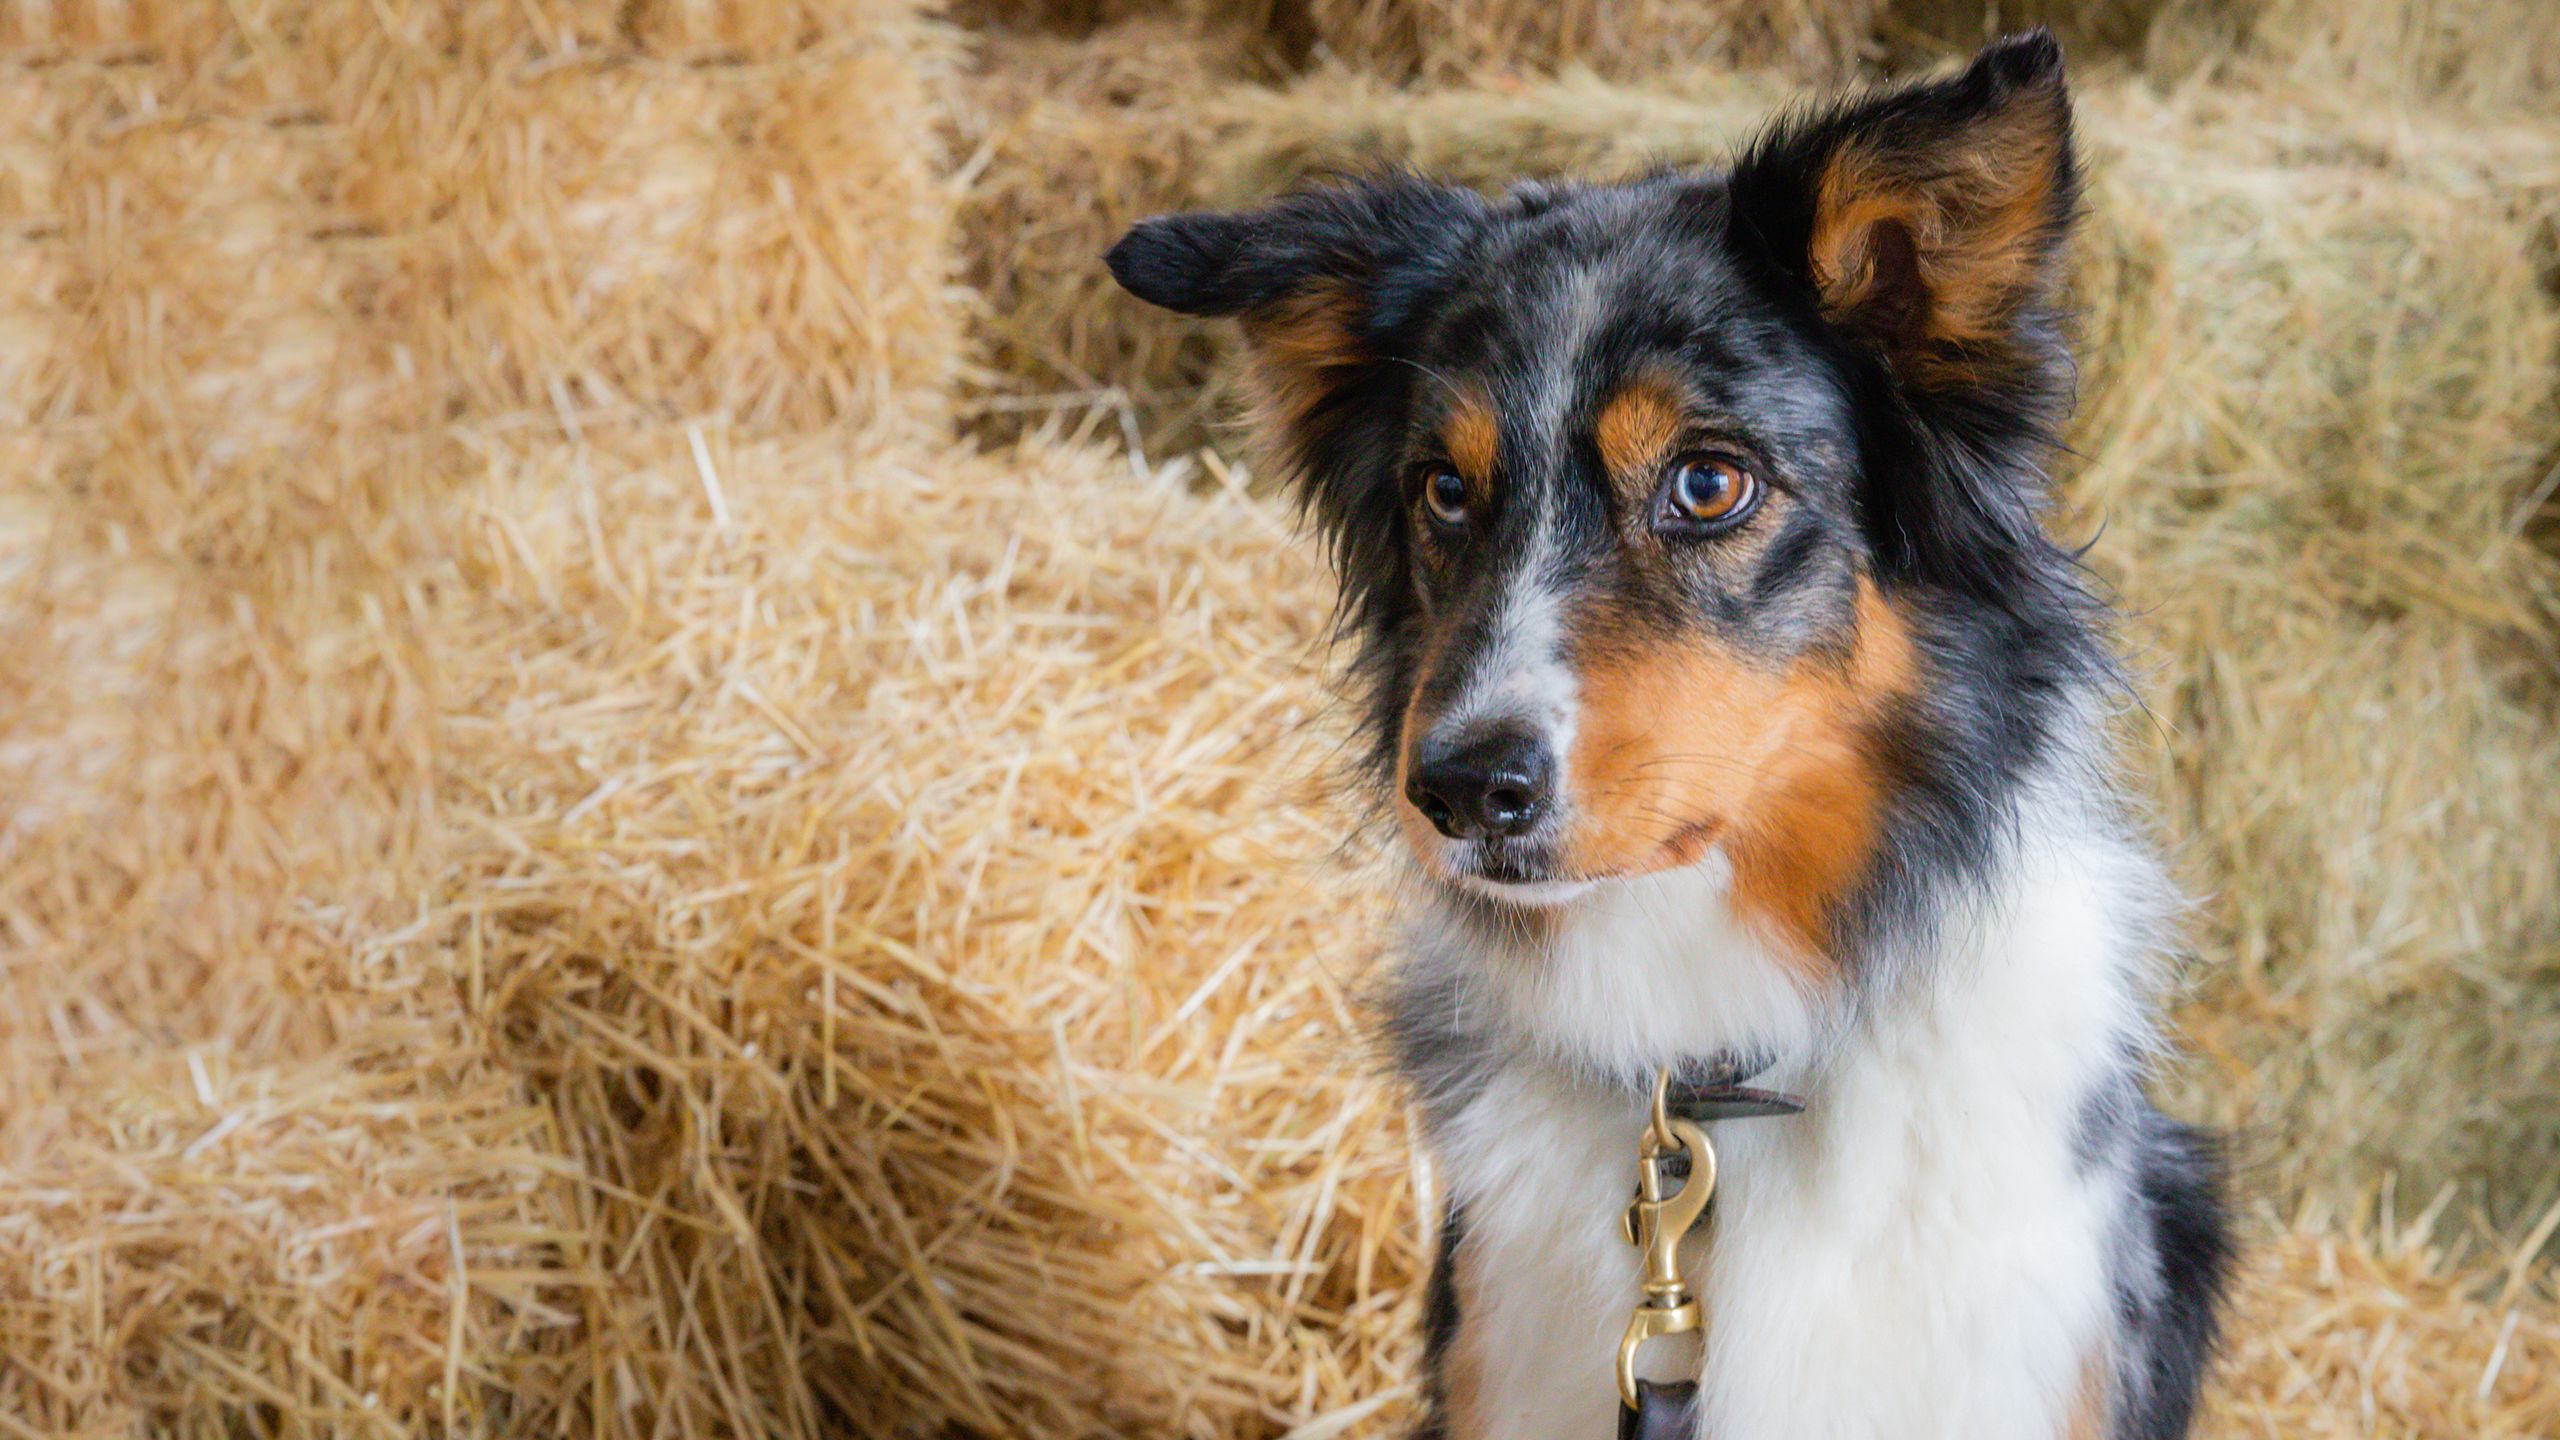 Dog in hay barn